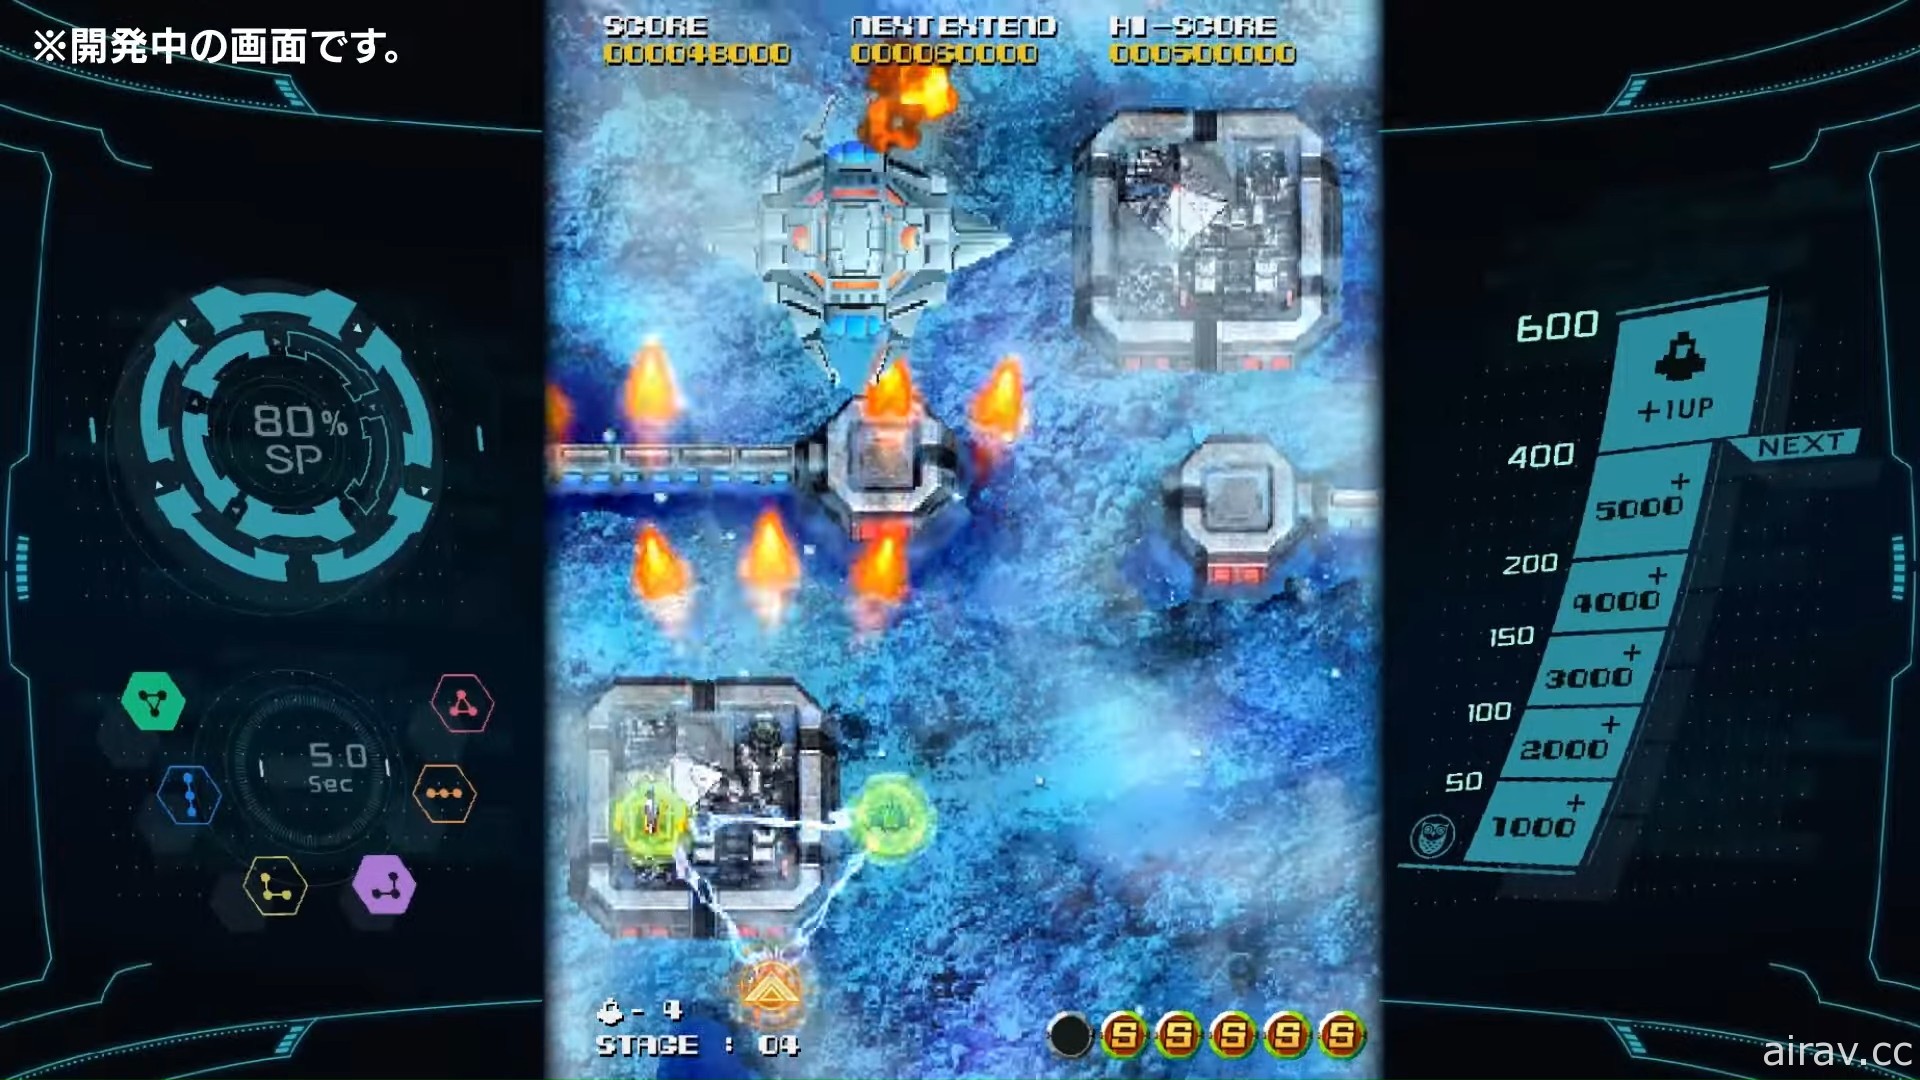 PlatinumGames 宣布推出经典射击游戏《巅峰战机》系列最新作《太阳巅峰战机》